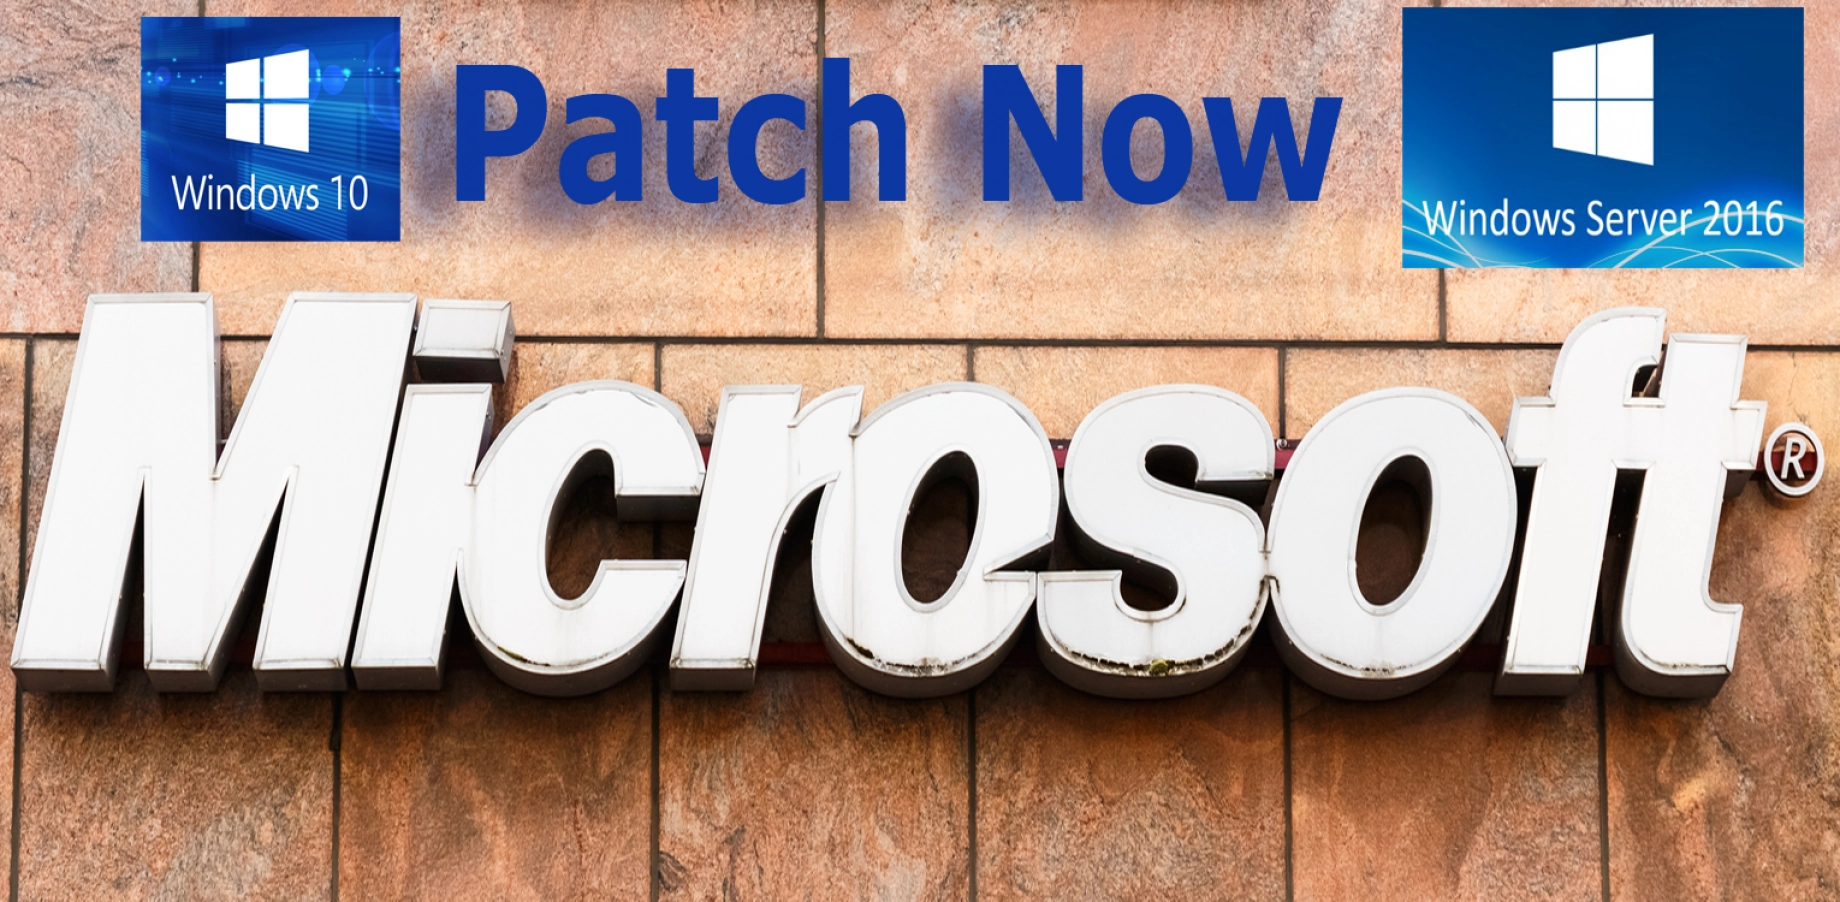 Microsoft Windows 10 and Server 2016/2019 Patch